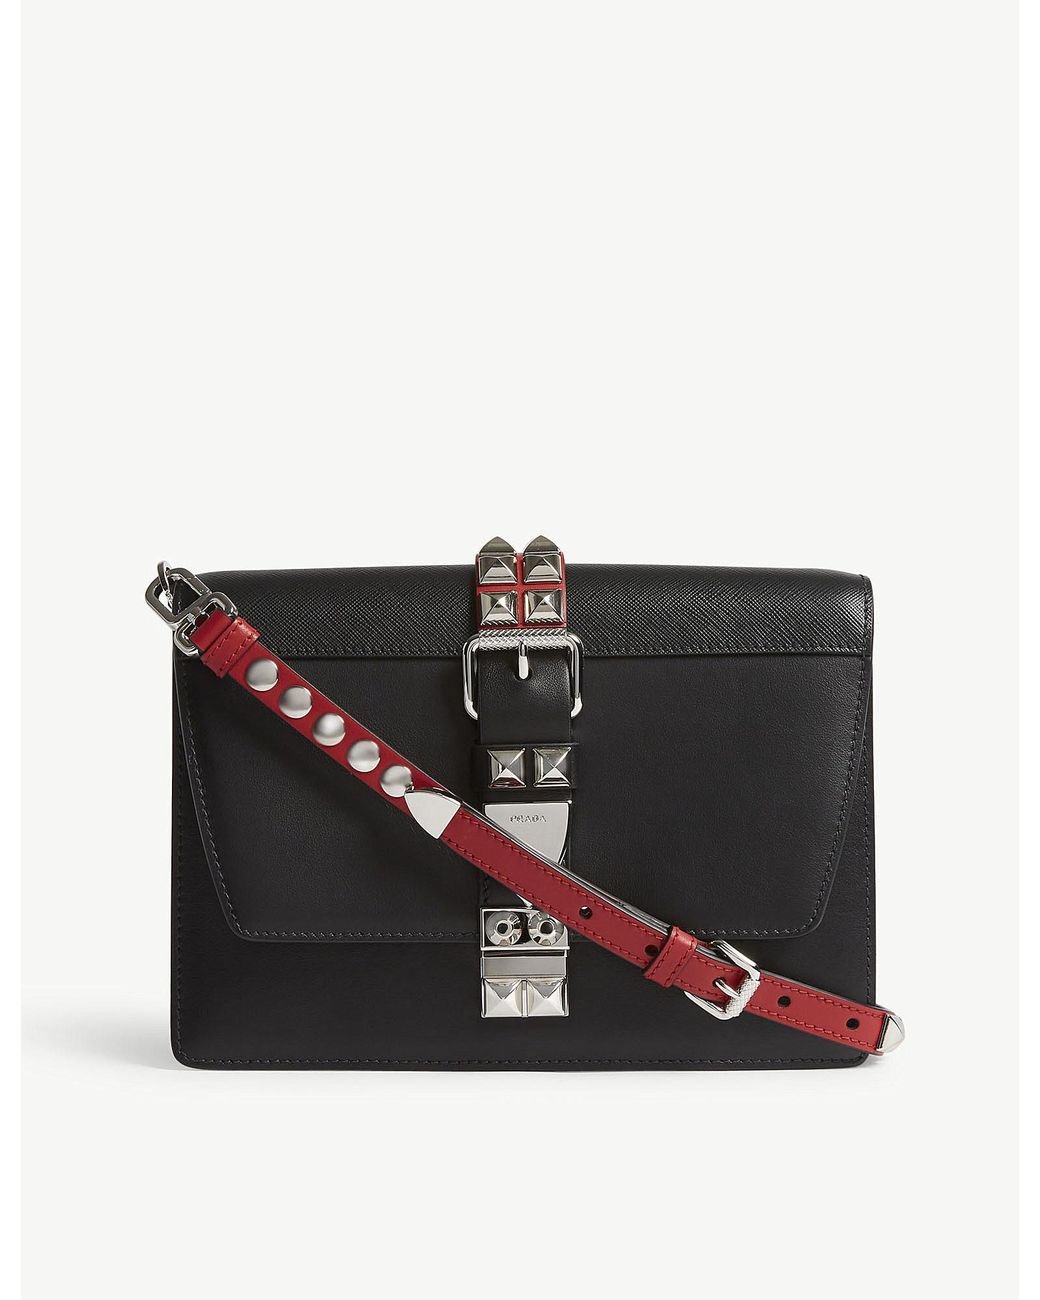 Prada Elektra Studded Medium Leather Shoulder Bag in Black | Lyst